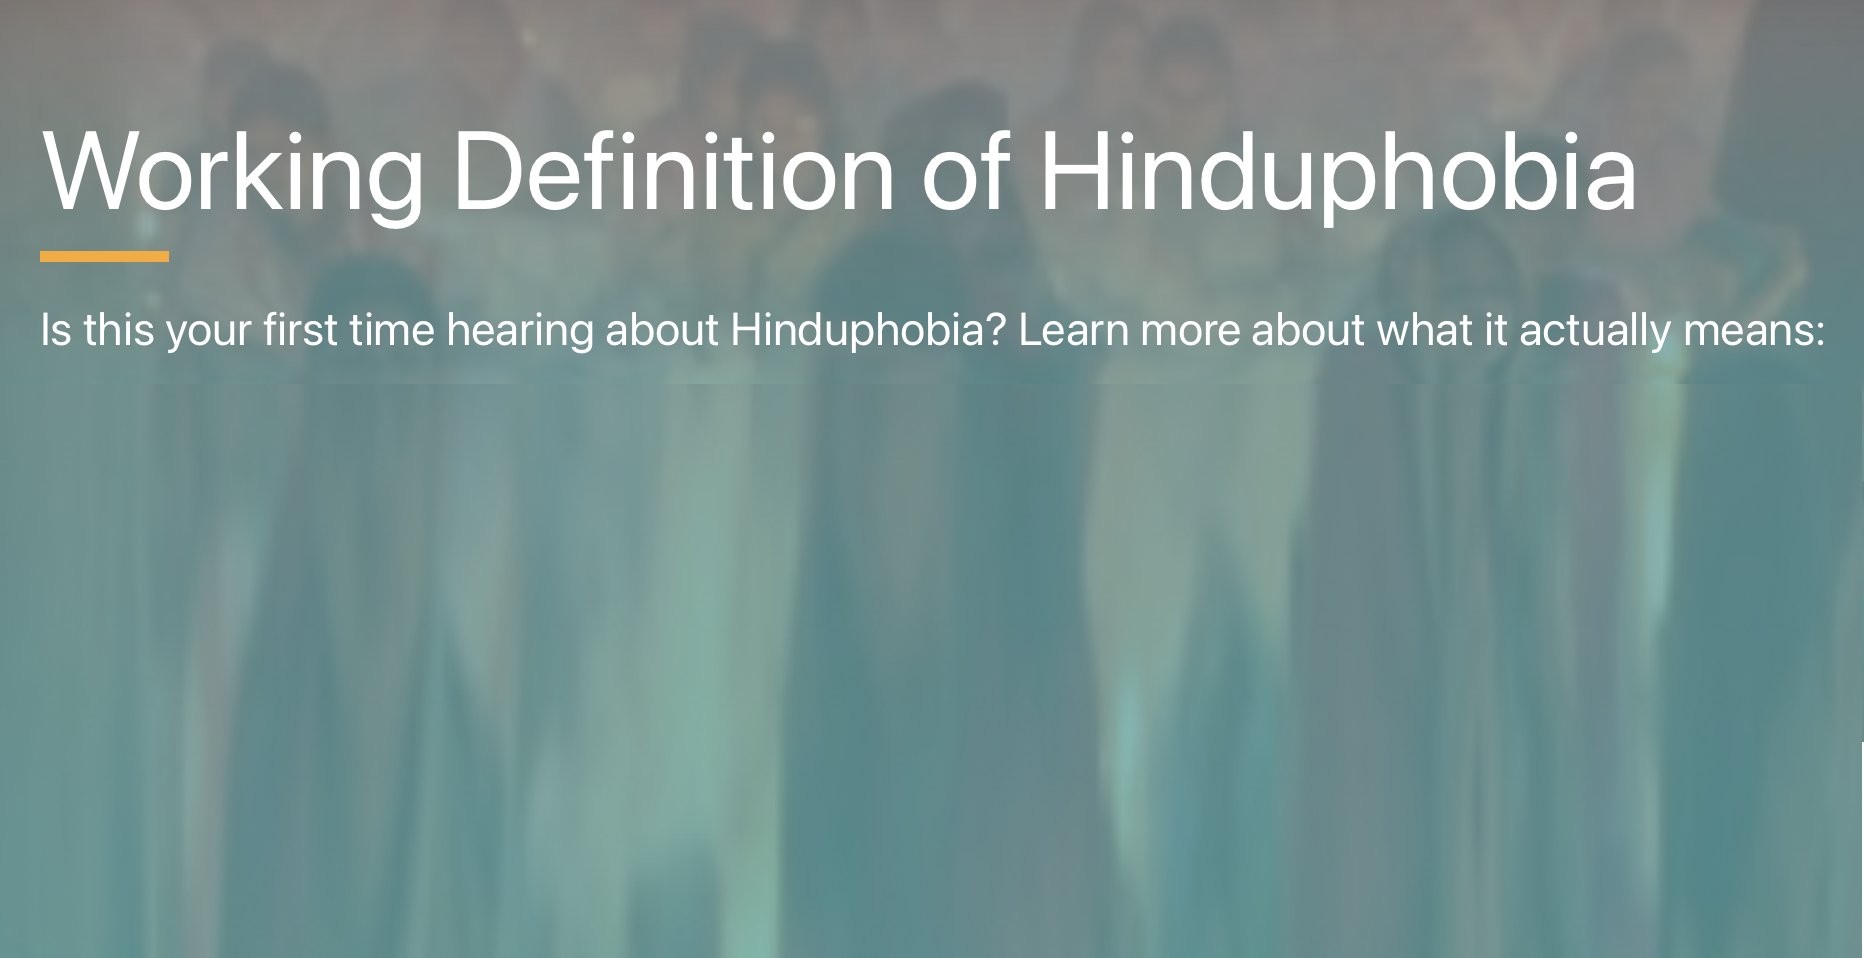 Working Definition of Hinduphobia